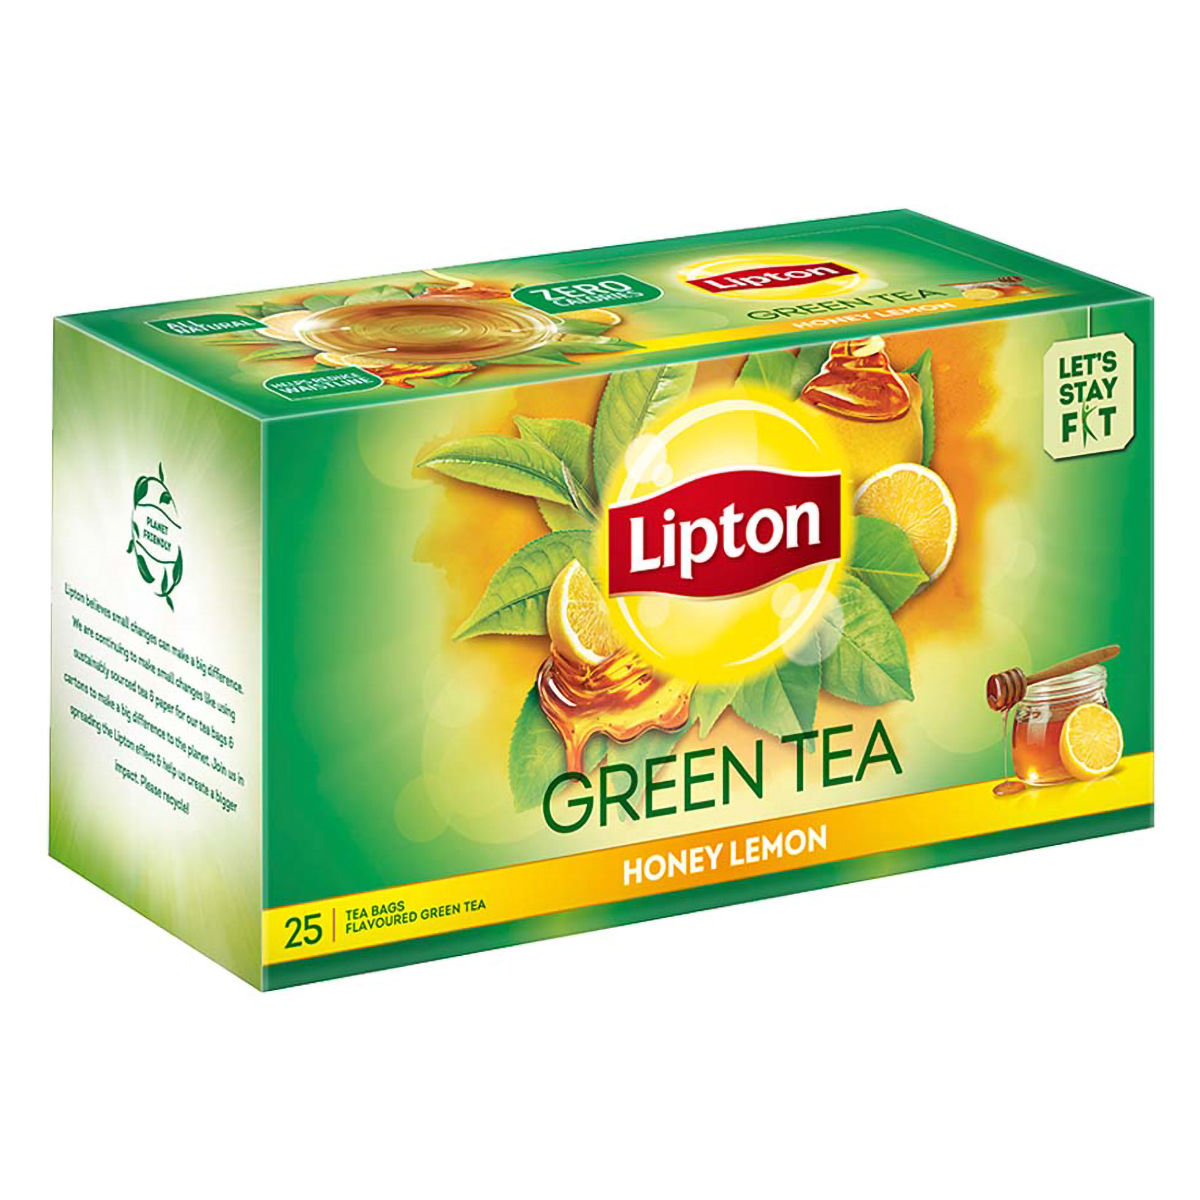 Lipton Green Tea 50 Gm; Mild Sweet Flavors 2 Minerals Potassium Fluoride -  Arad Branding